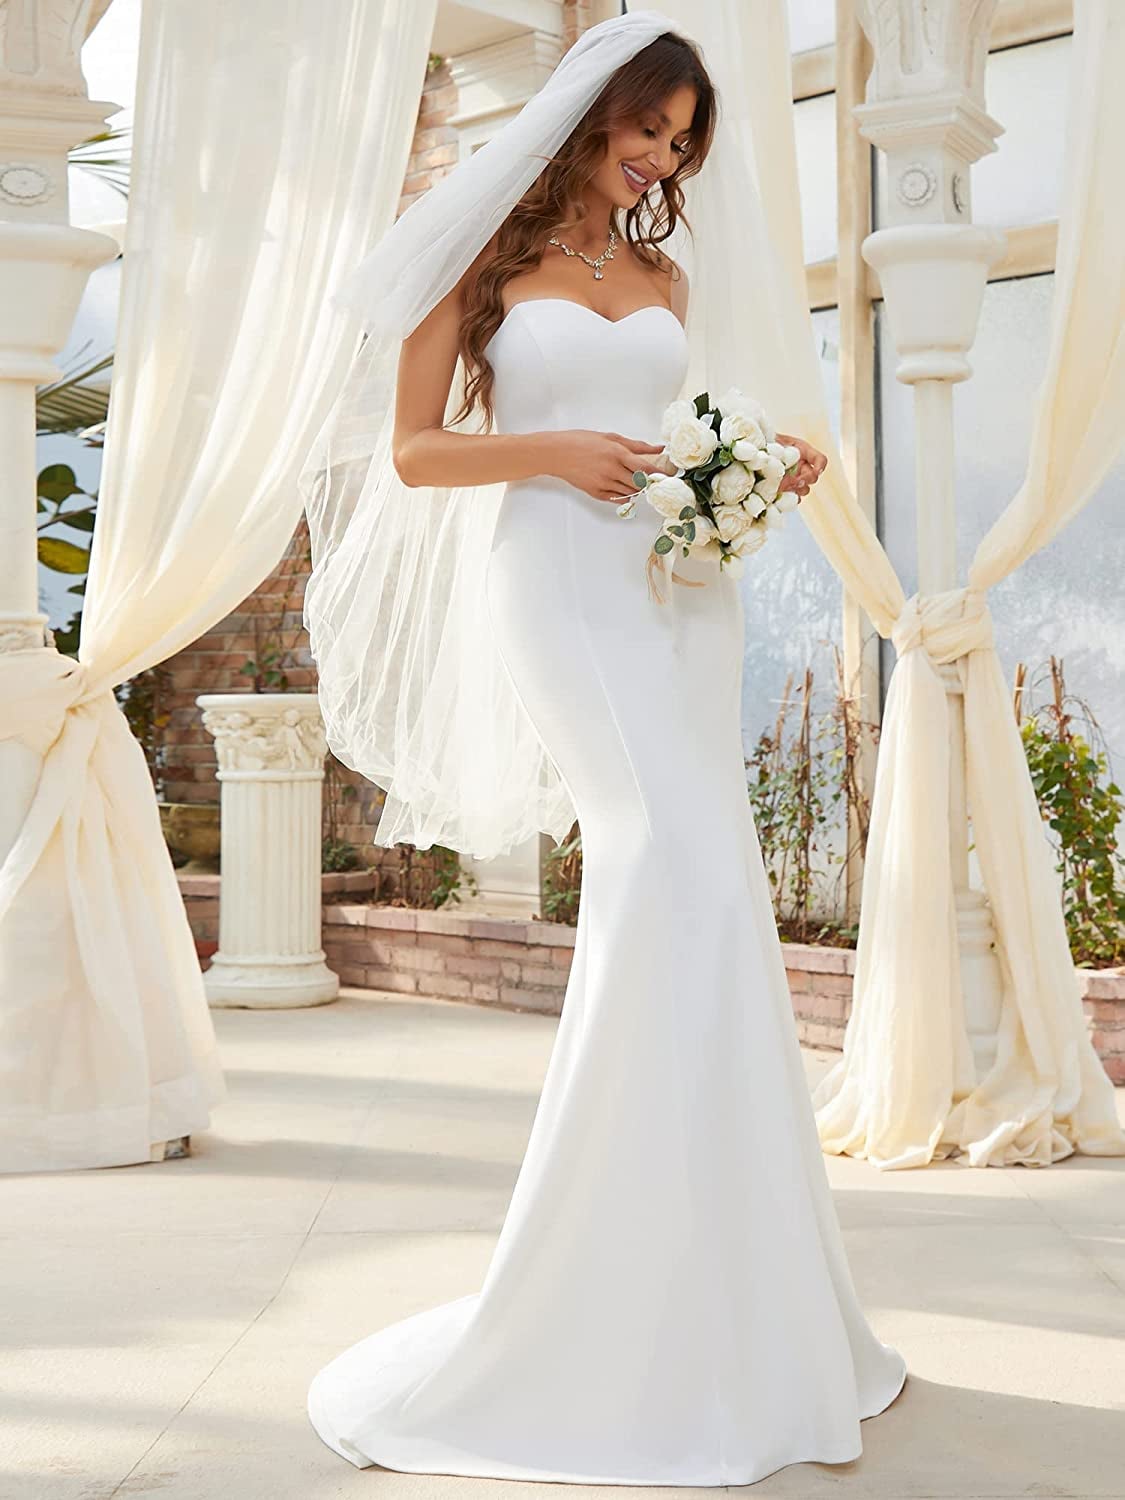 Strapless Wedding Dress Bra : Target